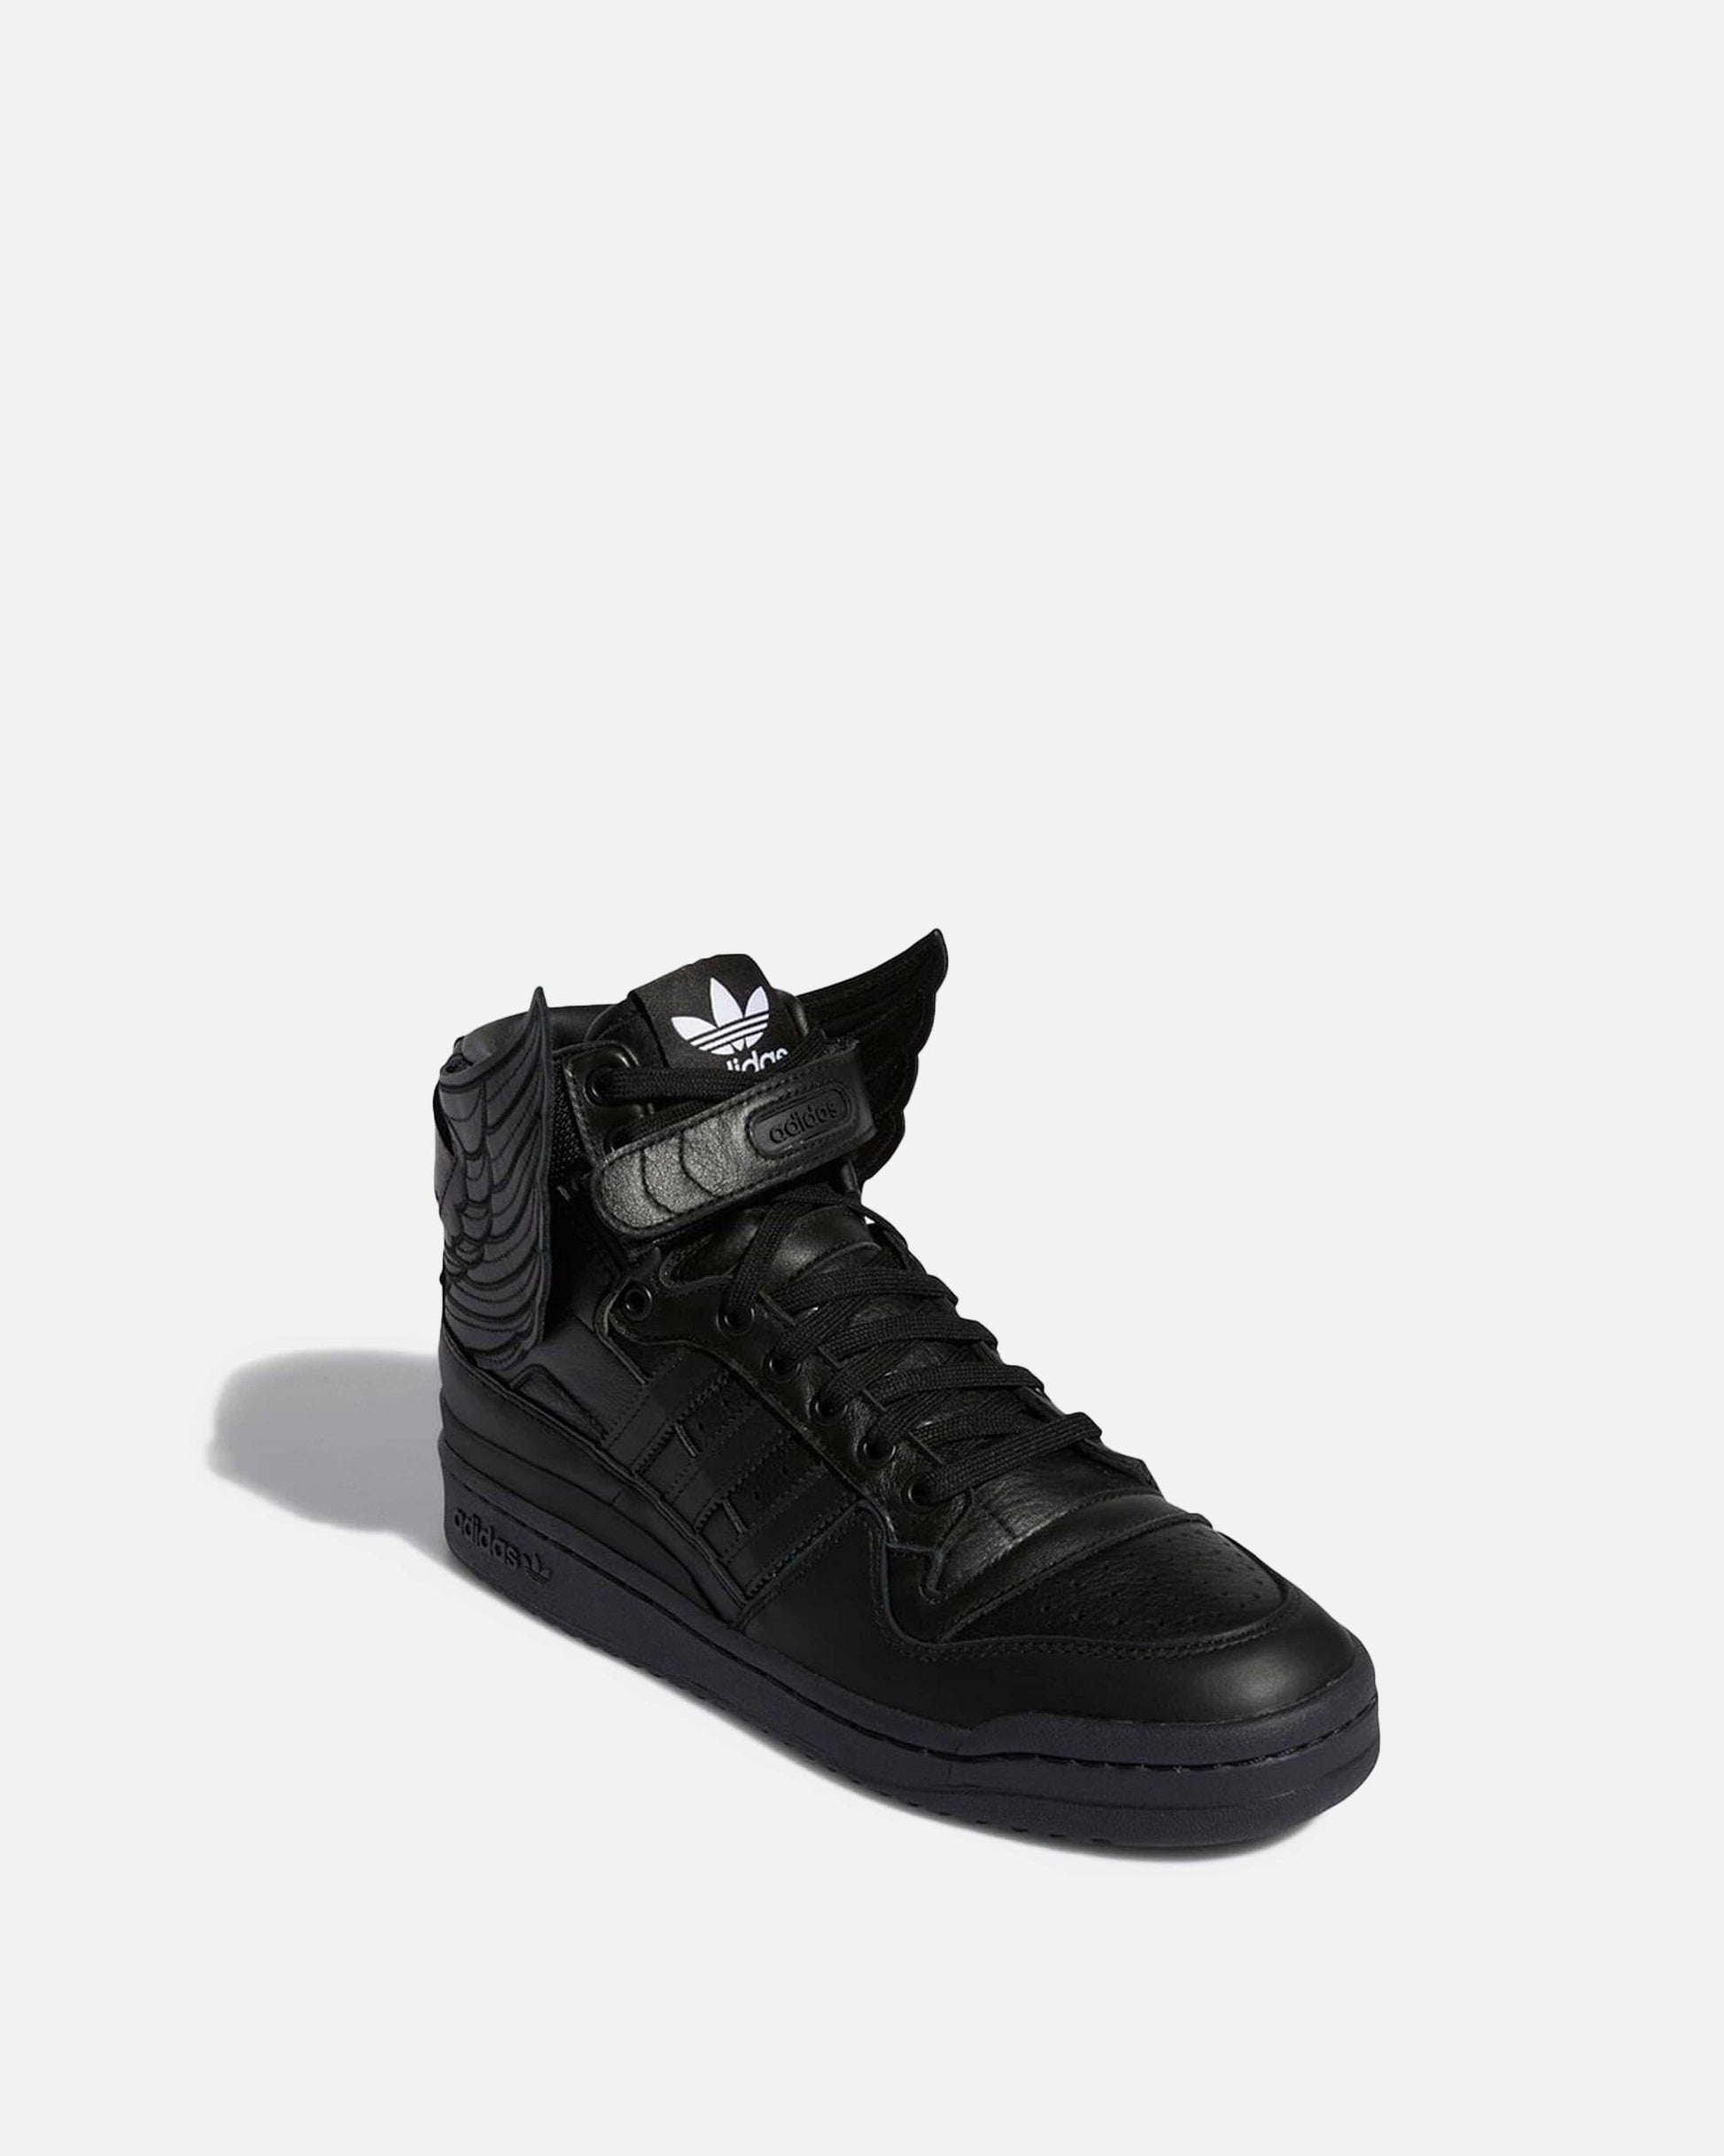 Adidas Men's Sneakers Jeremy Scott Forum Hi Wings 4.0 'Black'